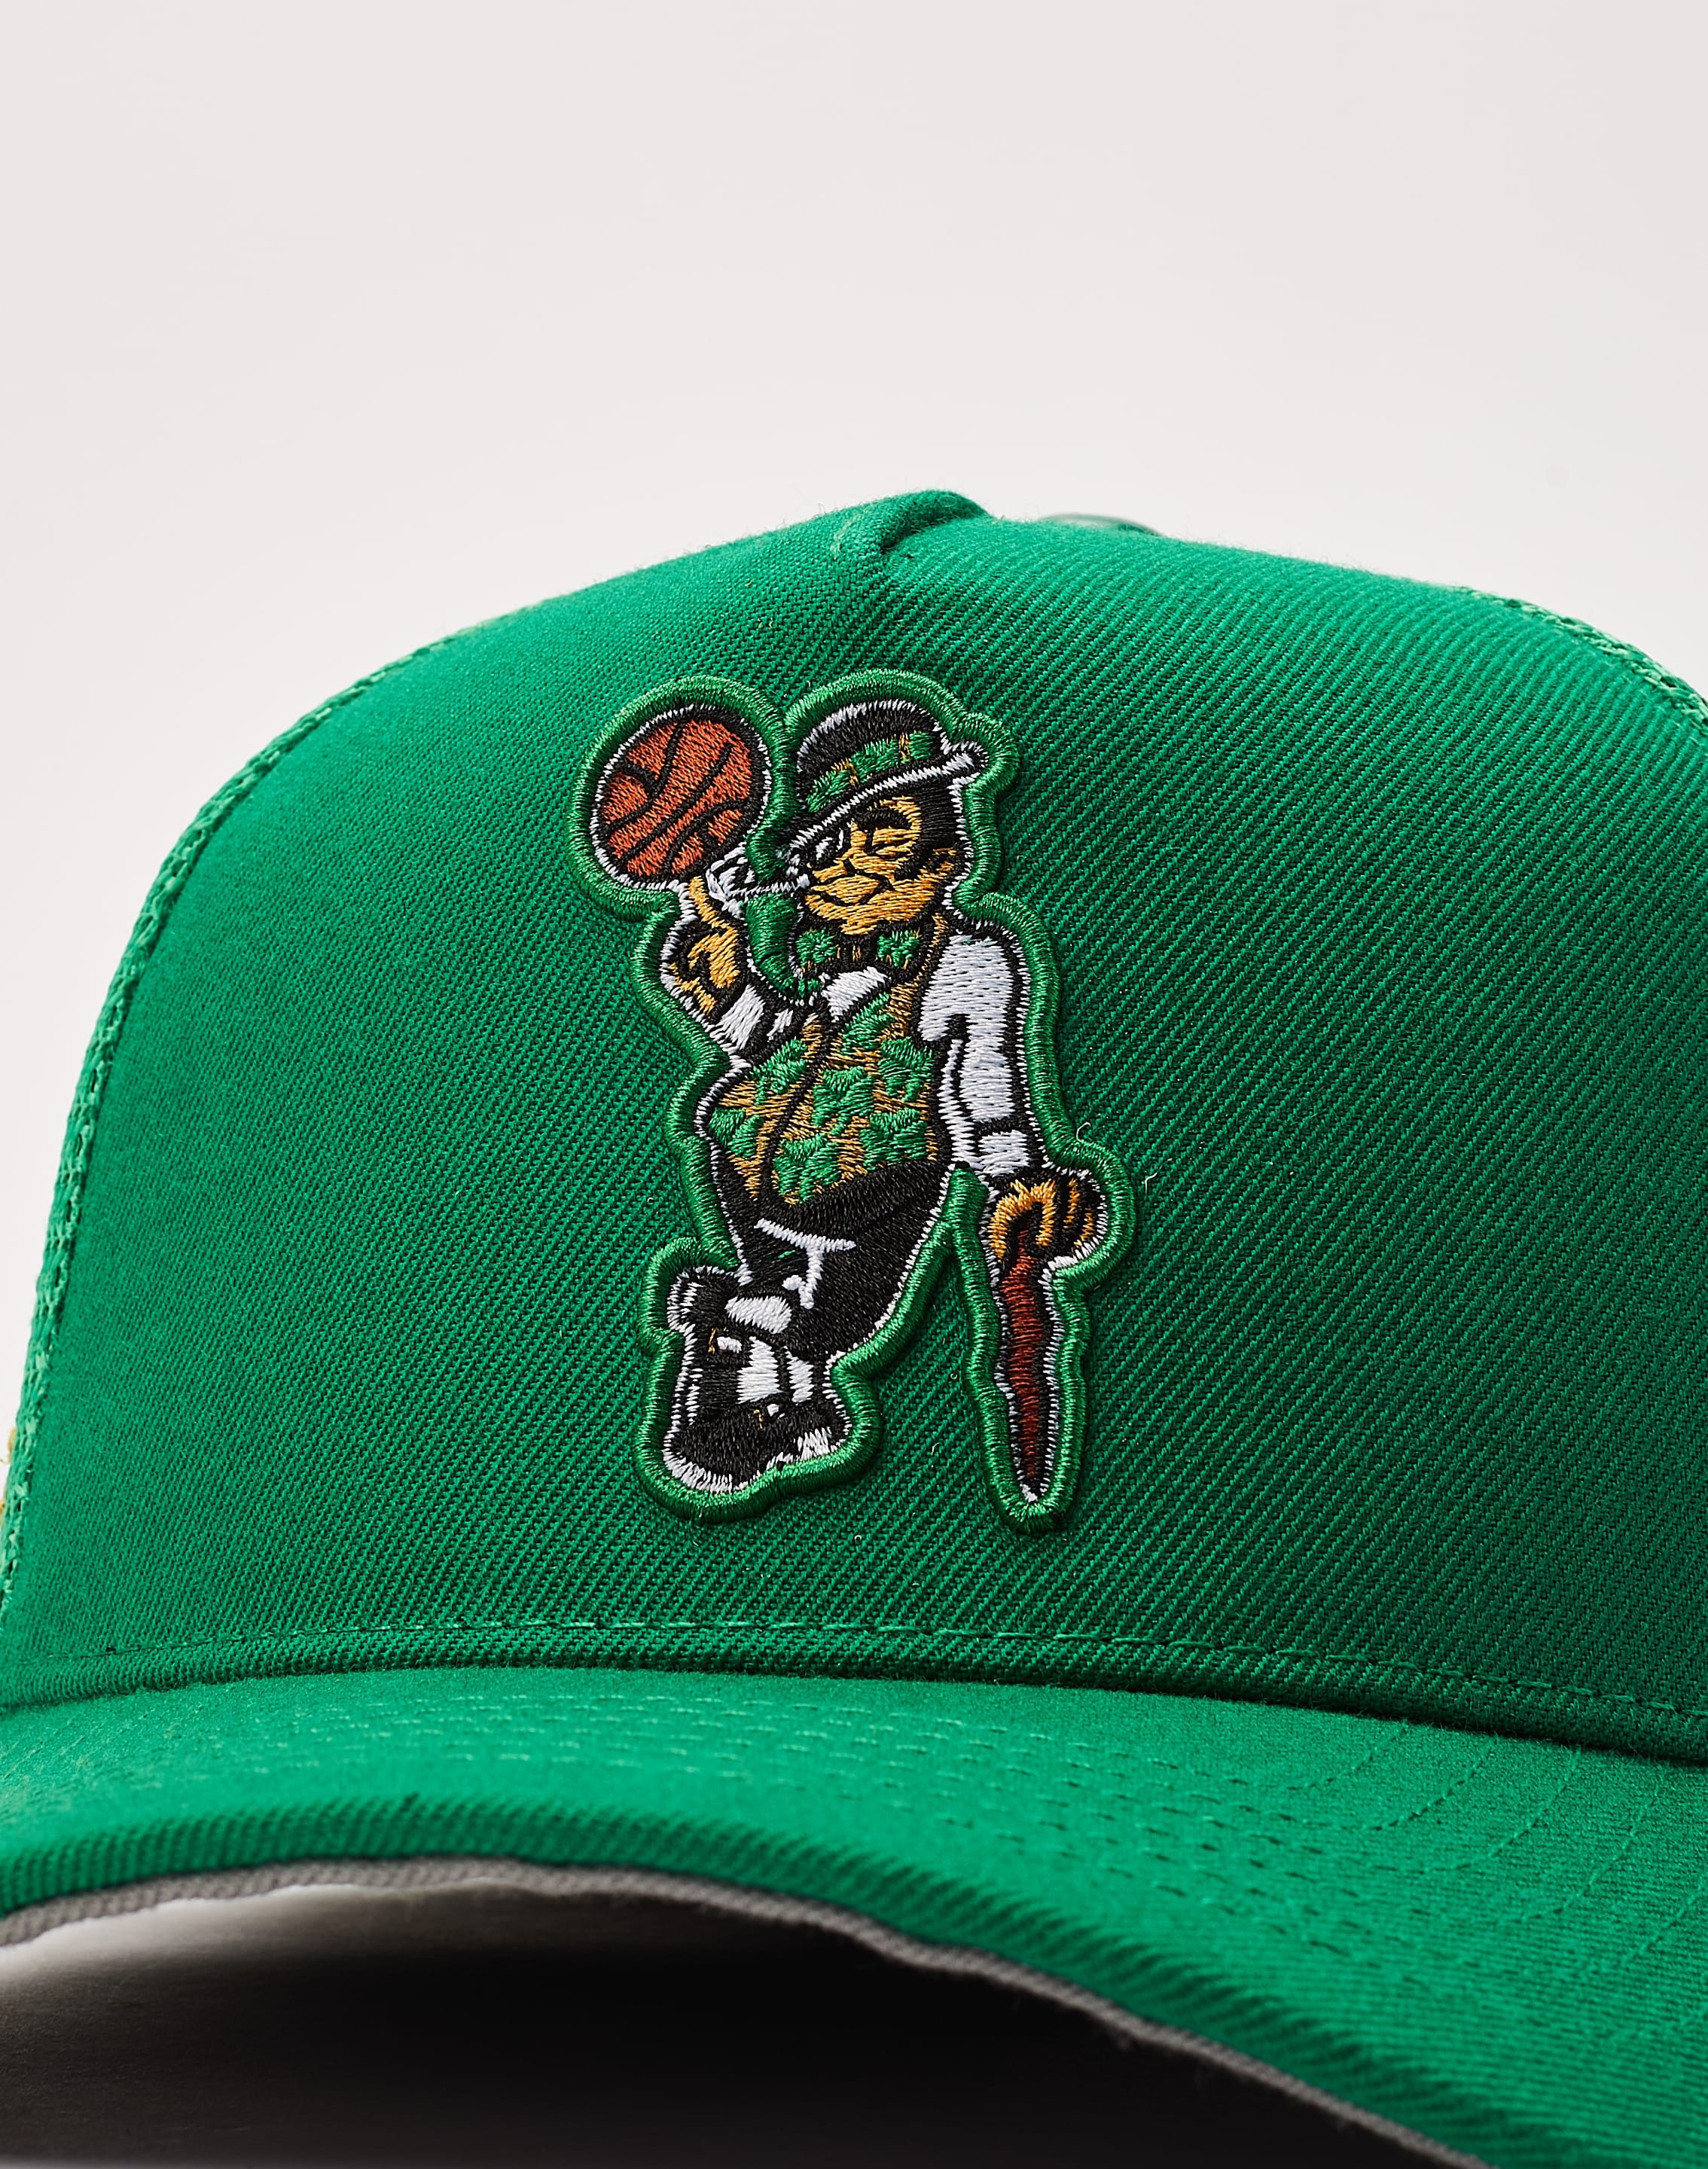 Boston Celtics Adidas Youth Flex Fit Hat NBA